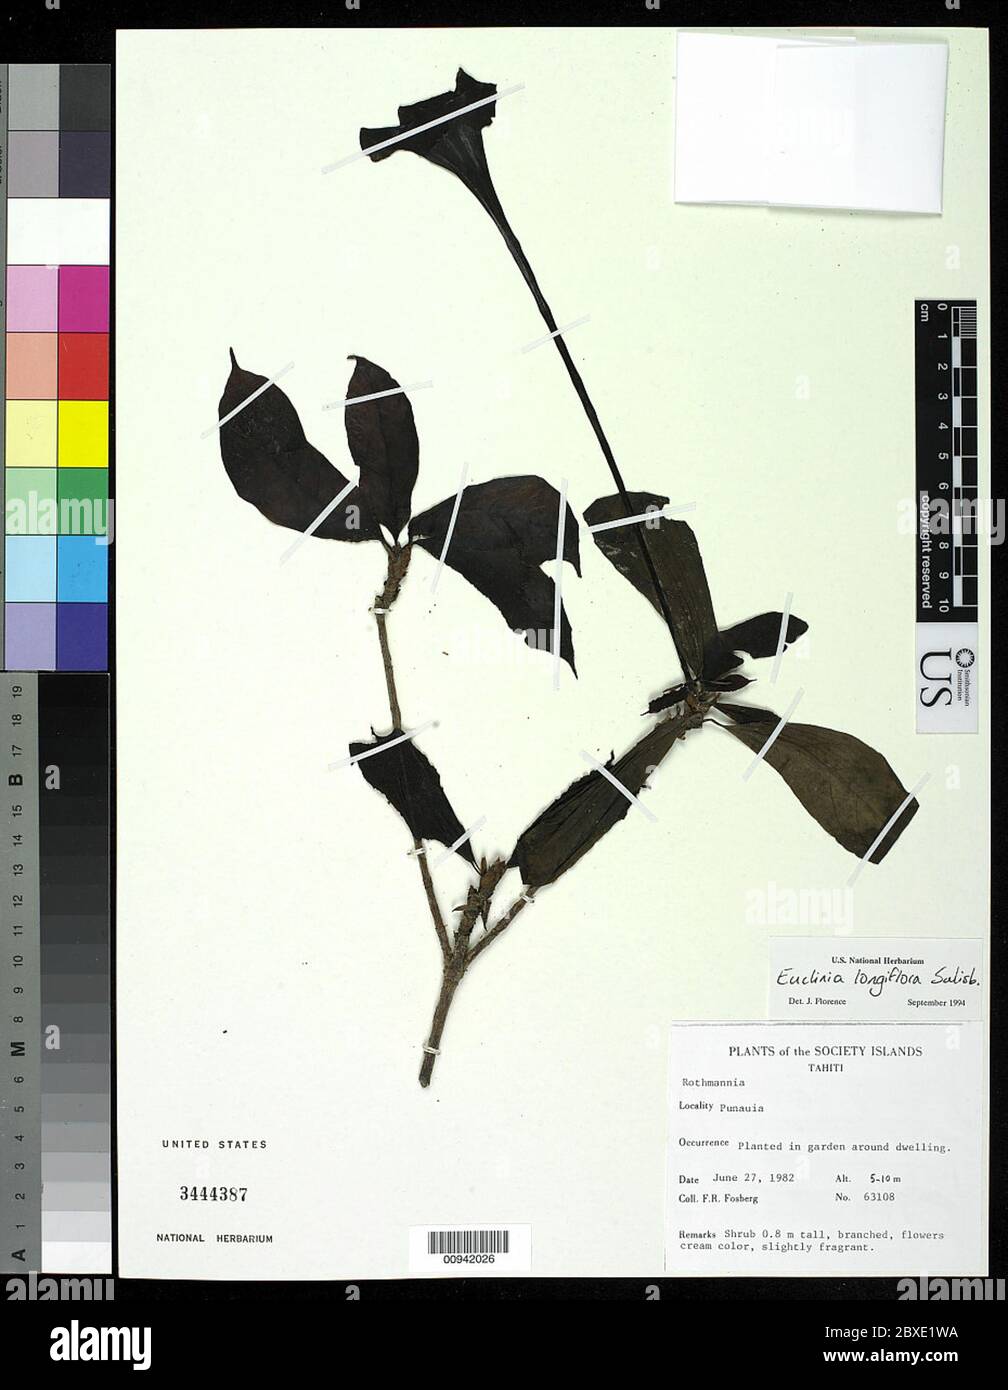 Euclinia longiflora Salisb Euclinia longiflora Salisb. Stock Photo